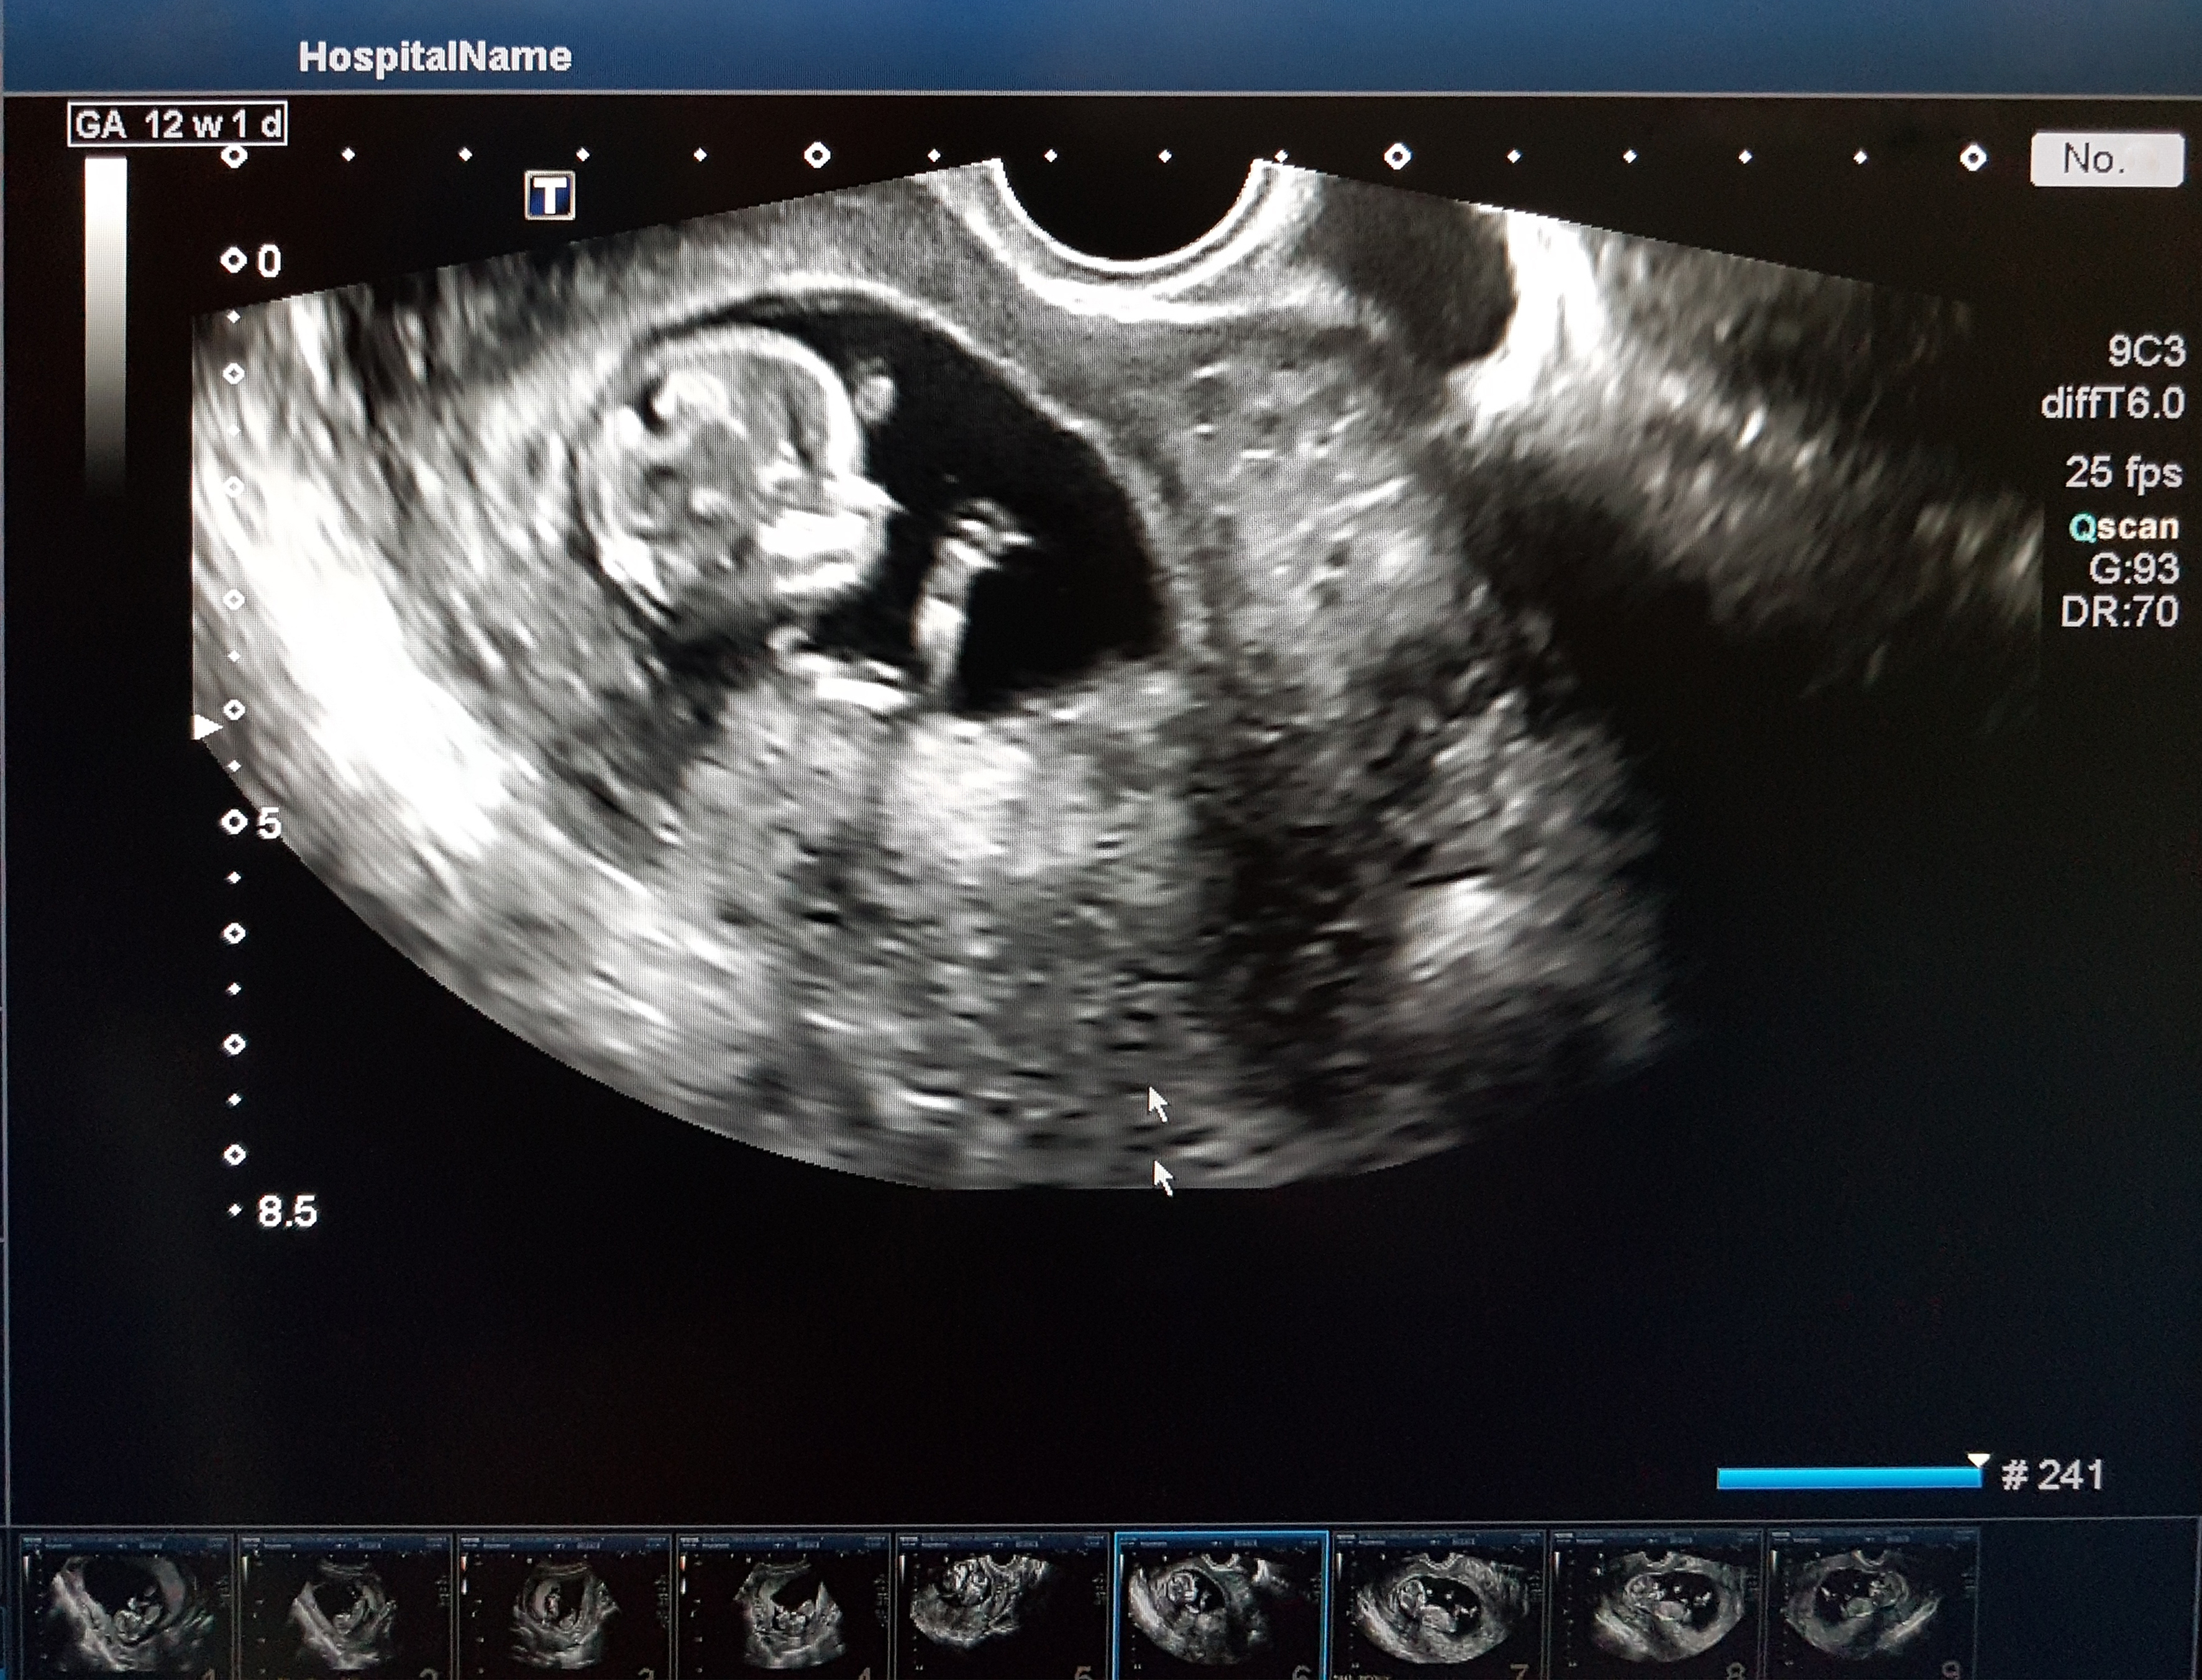 Ultrasound image showing a fetus at 12 weeks gestation